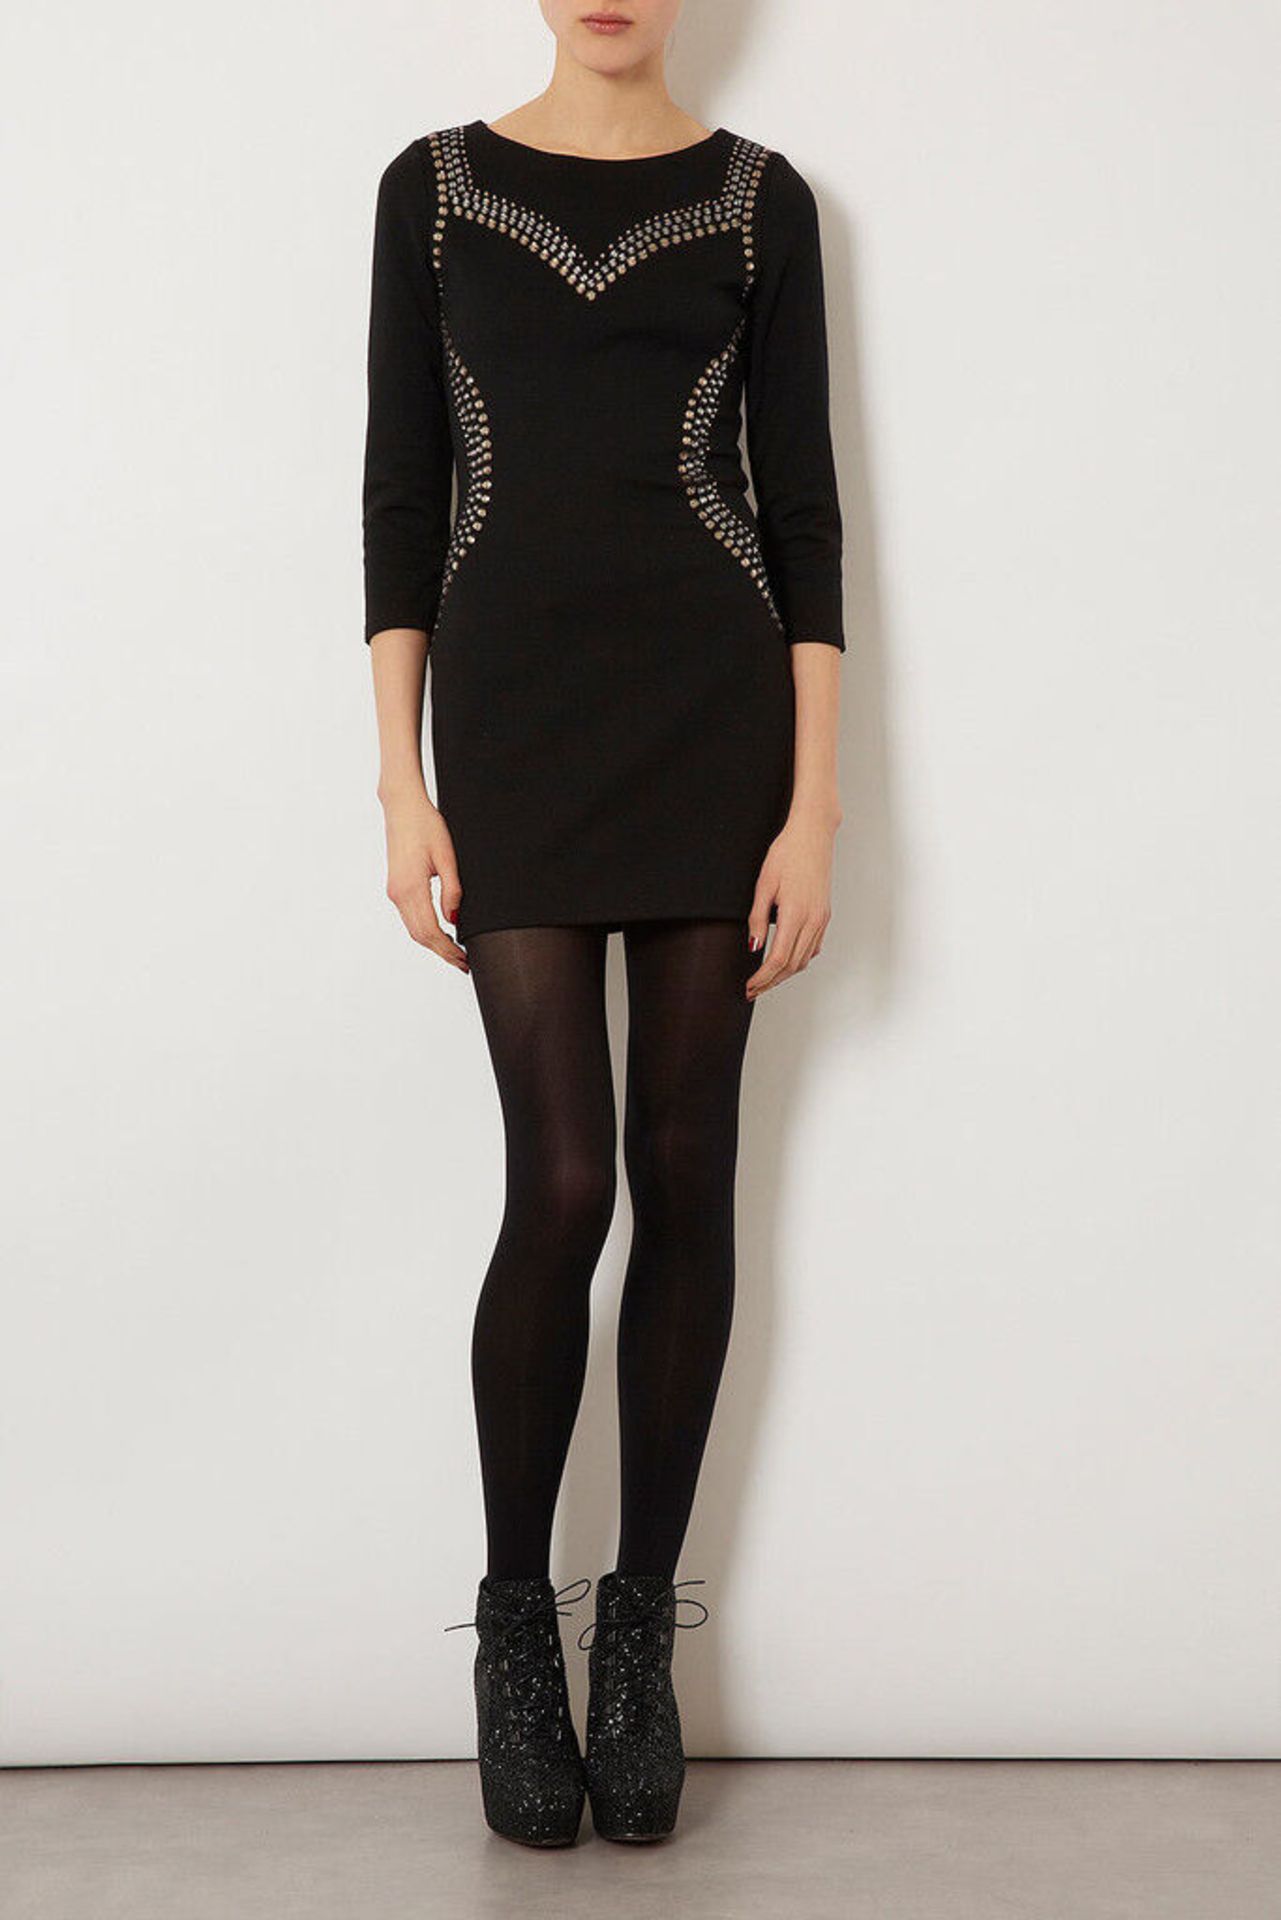 Liquidation Stock : Women's Black Embellished Dresses x 50 - Bild 2 aus 3